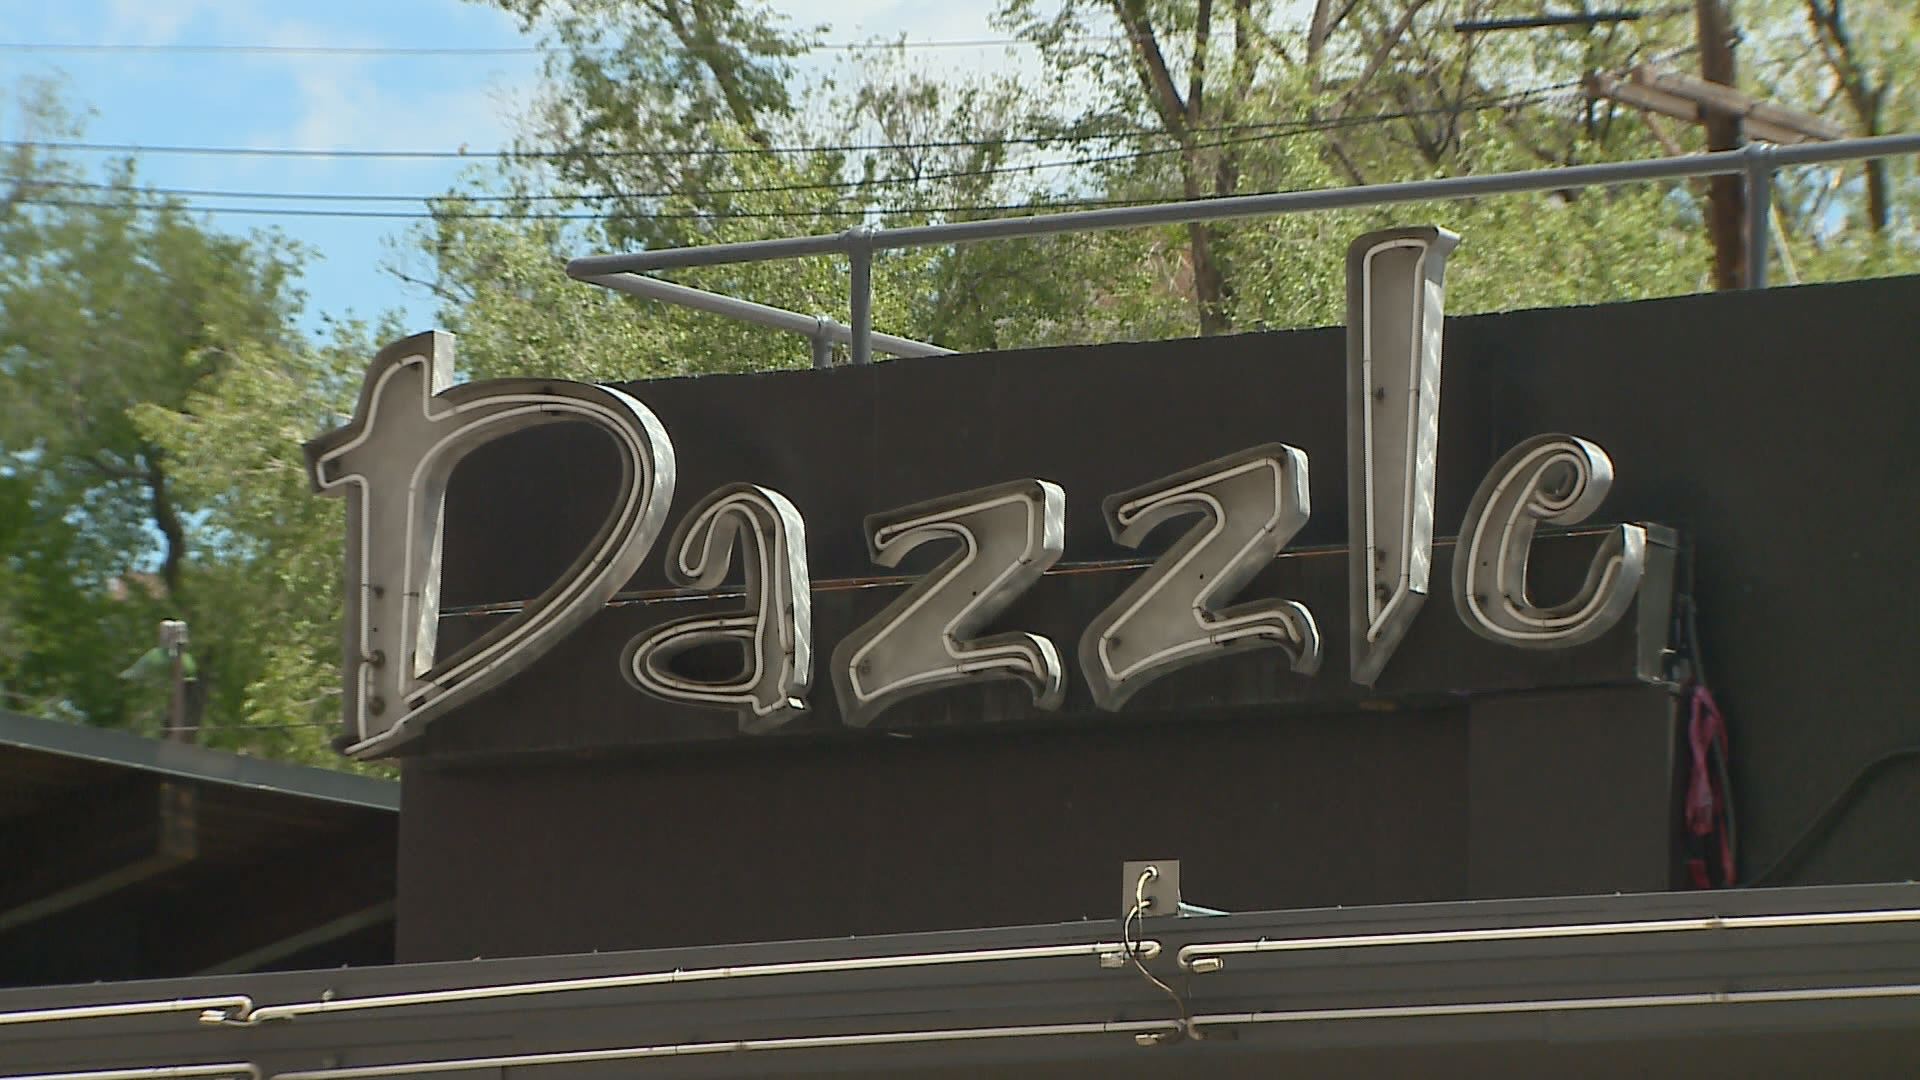 dazzle denver new location